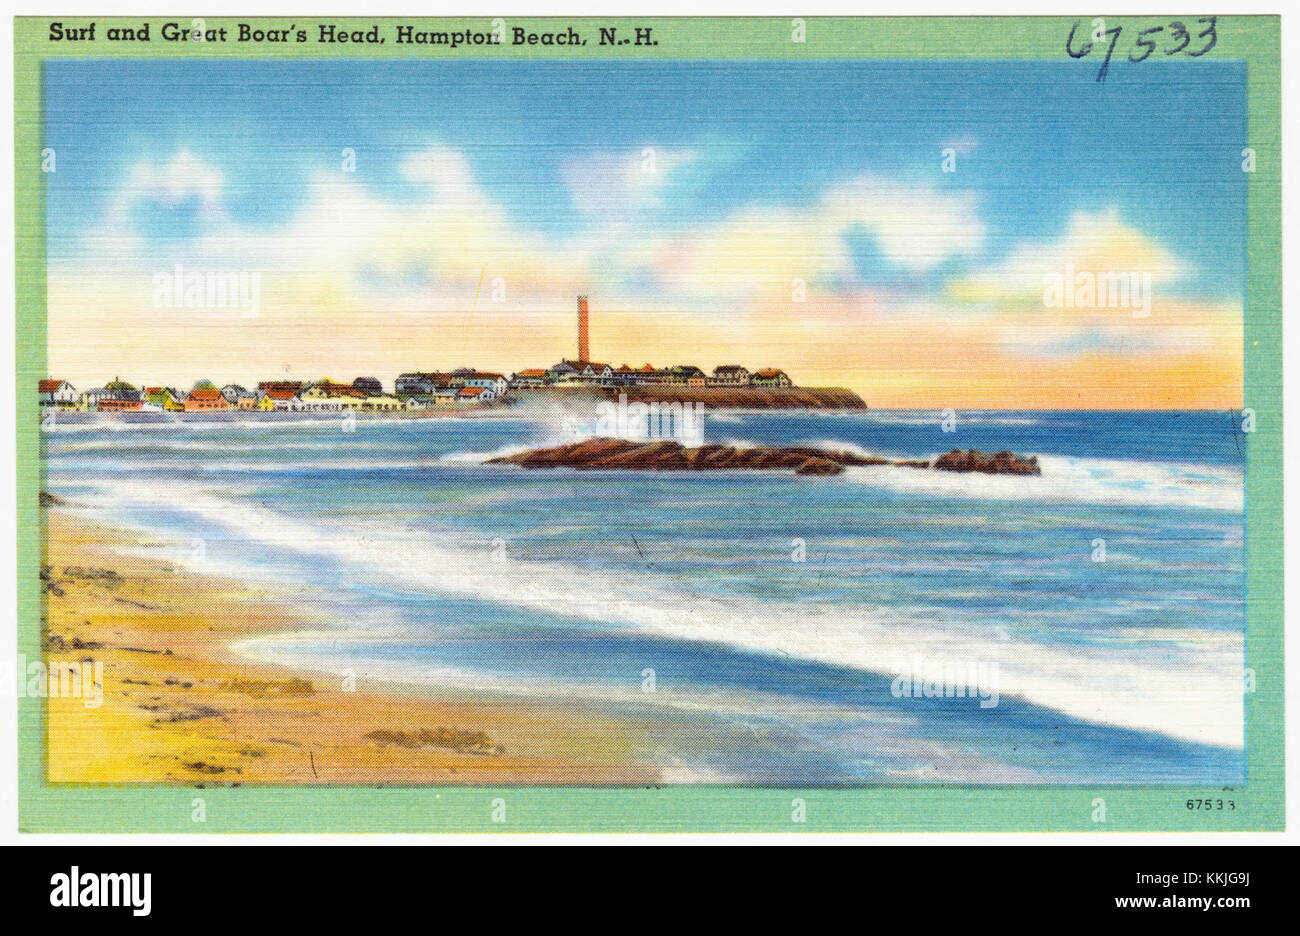 Surf and Great Boar's Head, Hampton Beach, N.H (67533) Stock Photo